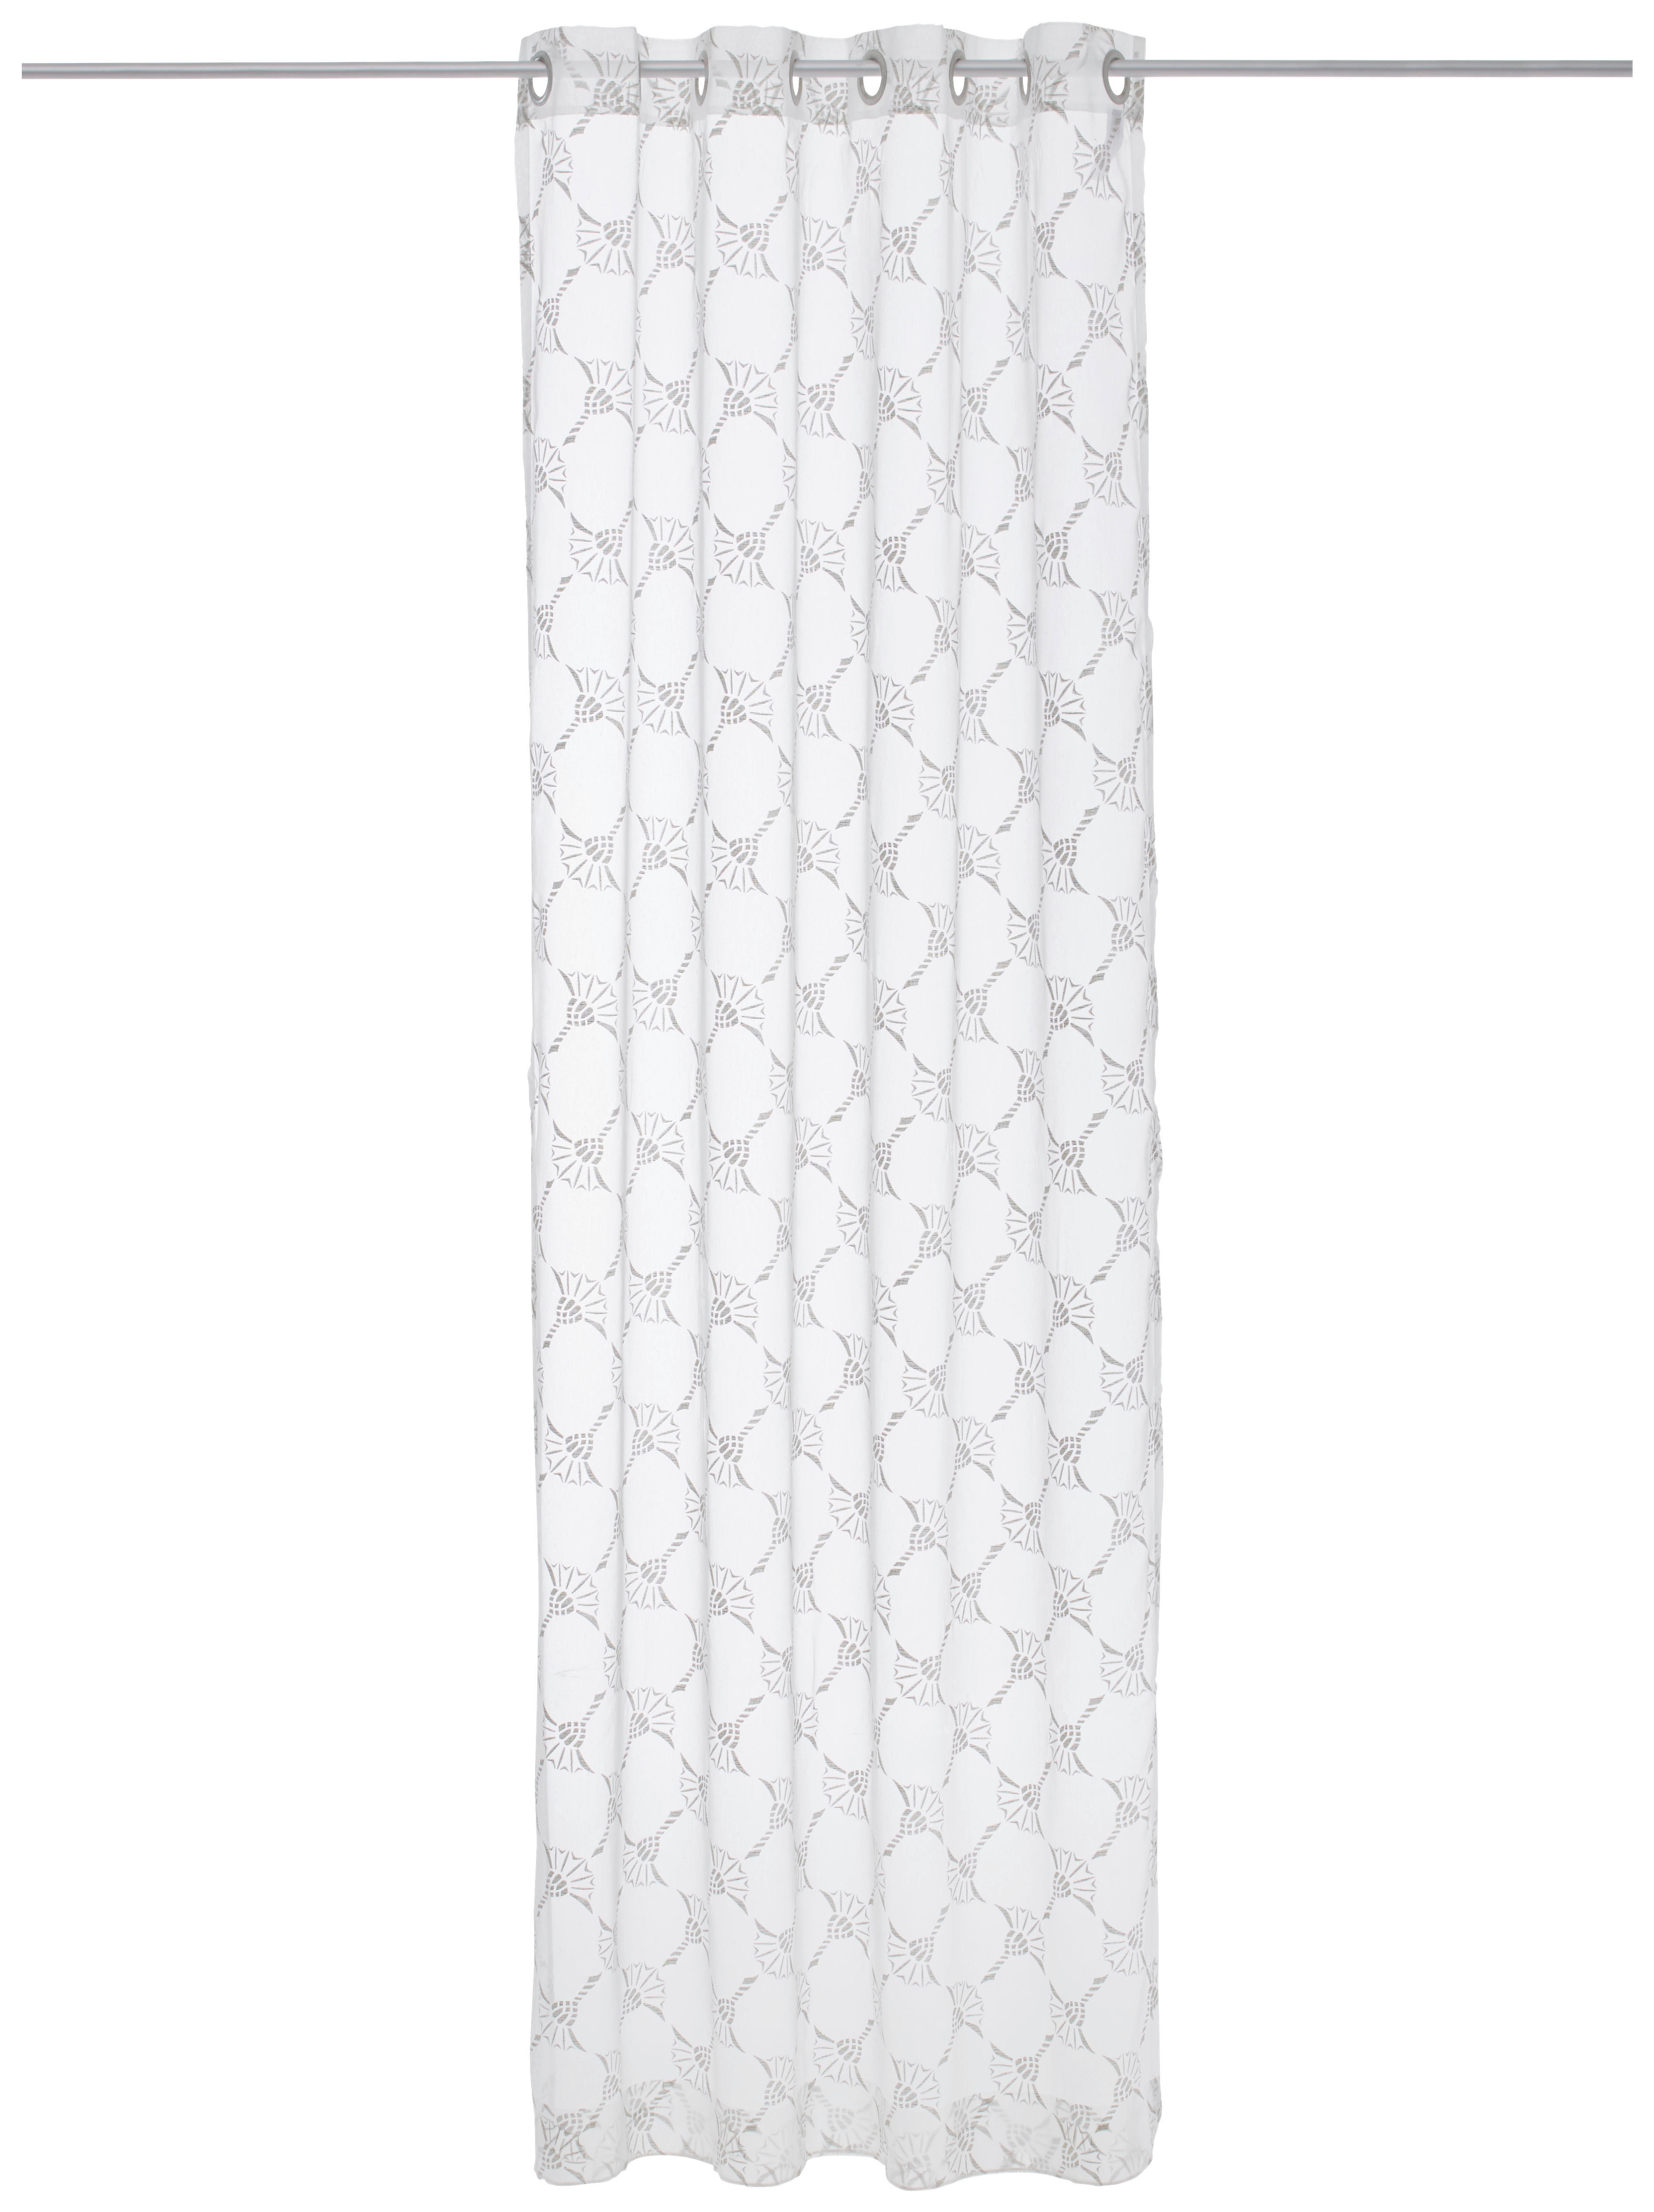 ÖSENSCHAL Airy transparent 140/250 cm   - Creme/Naturfarben, Design, Textil (140/250cm) - Joop!